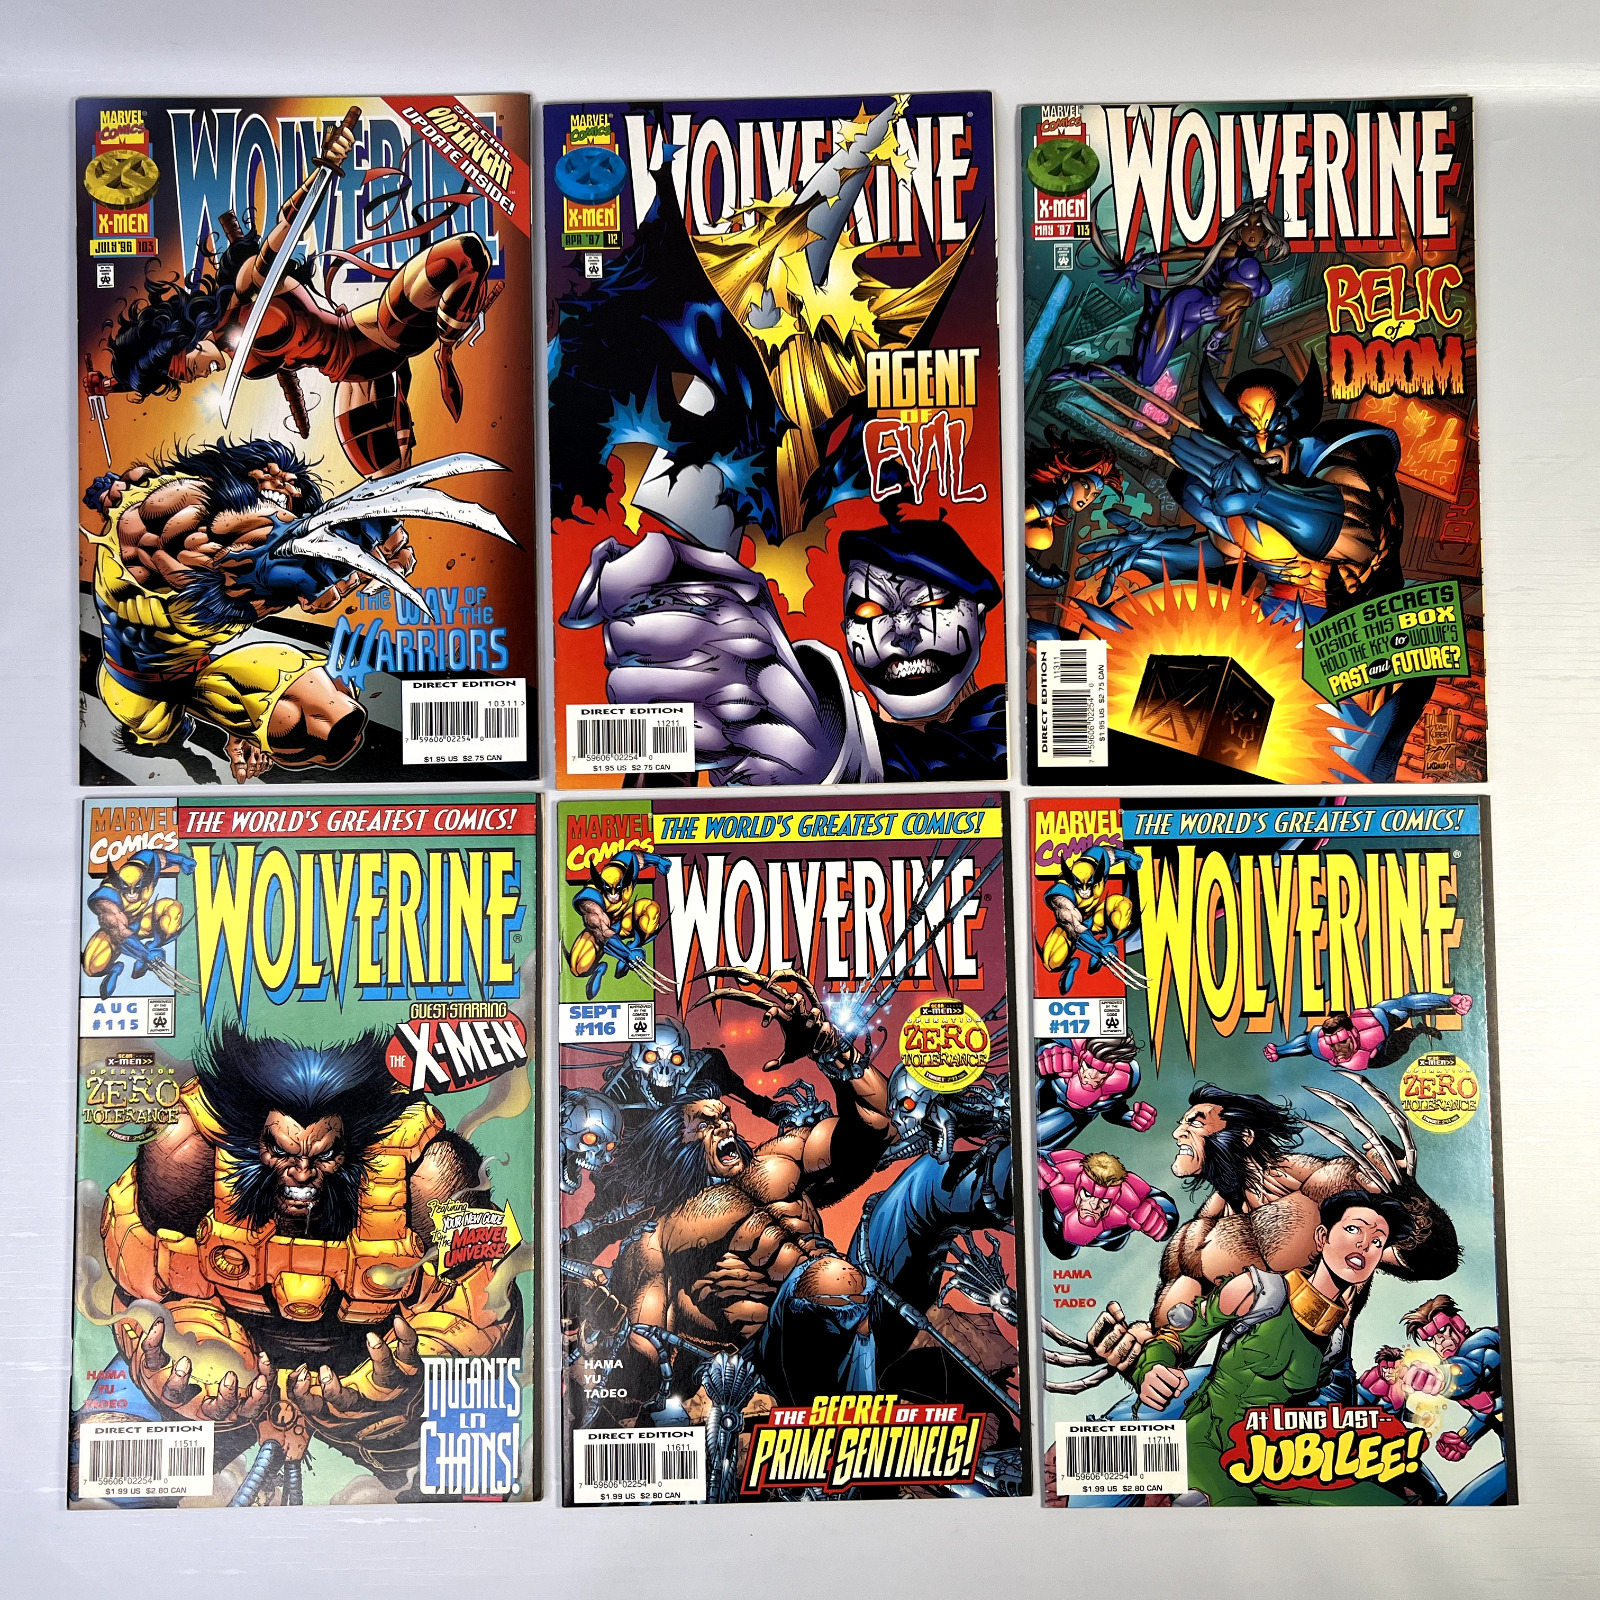 WOLVERINE Vol. 2 #103, 112, 113, 115-117 Lot of 6 High Grade Marvel Comics